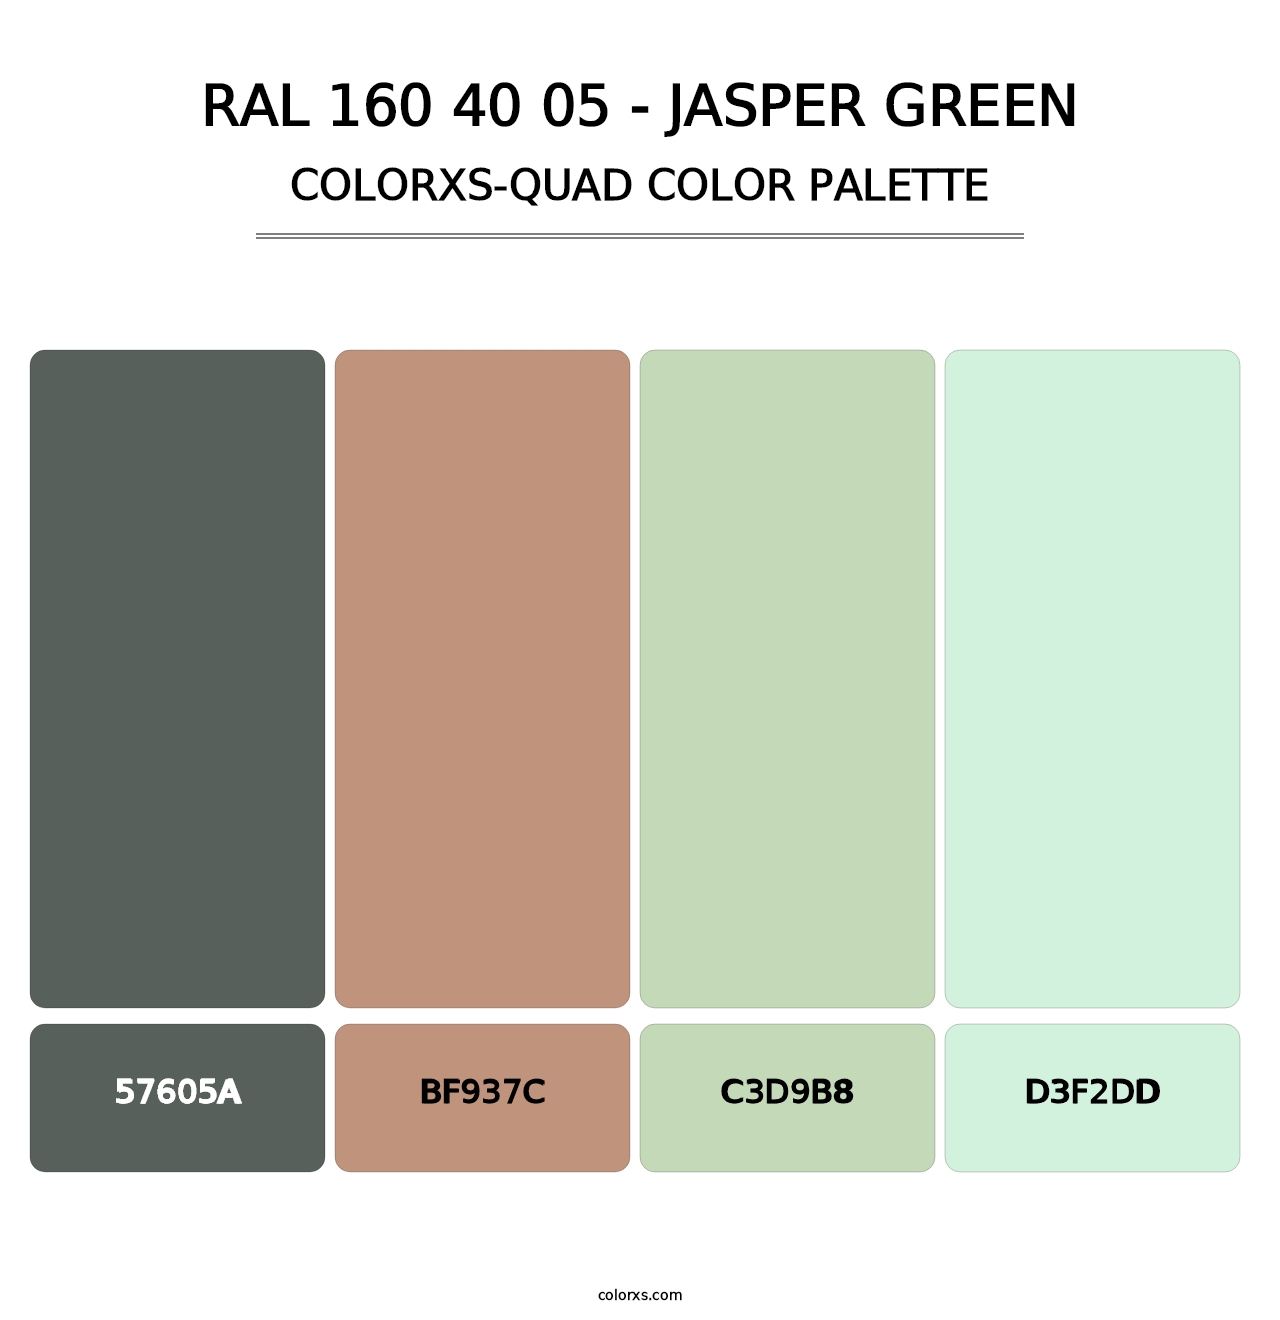 RAL 160 40 05 - Jasper Green - Colorxs Quad Palette